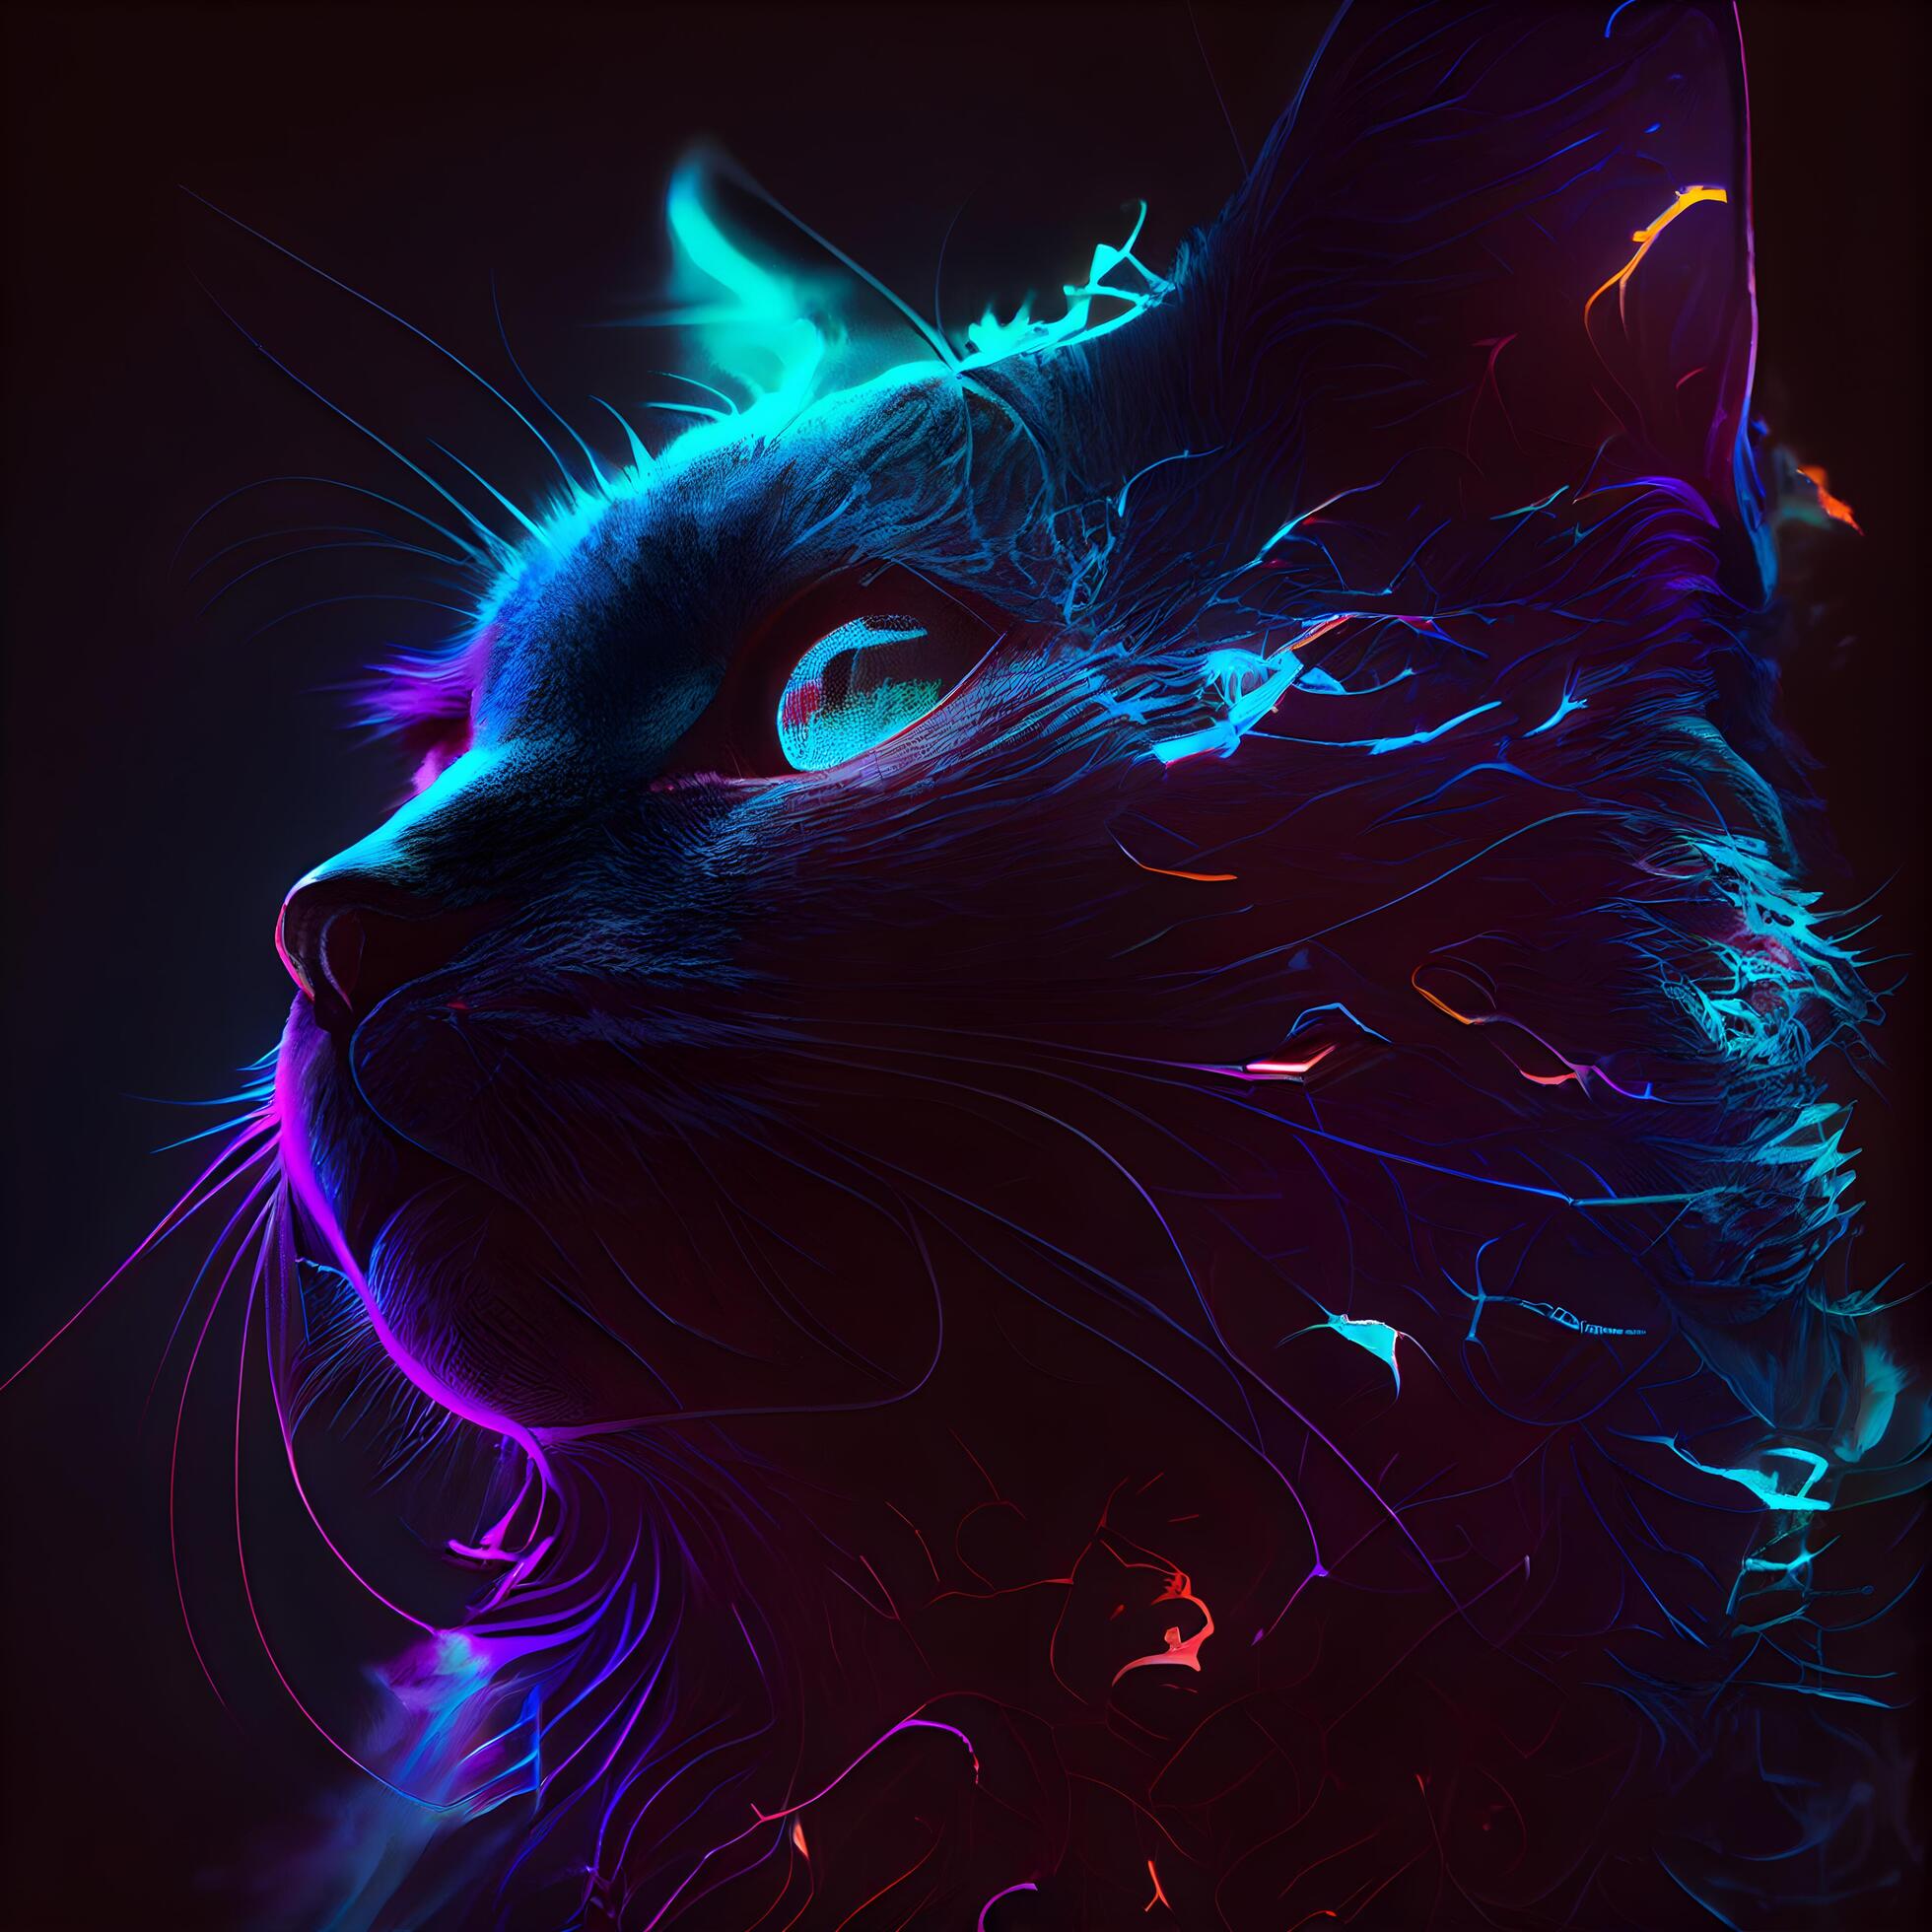 Neon cat - vibrant live wallpaper - free download